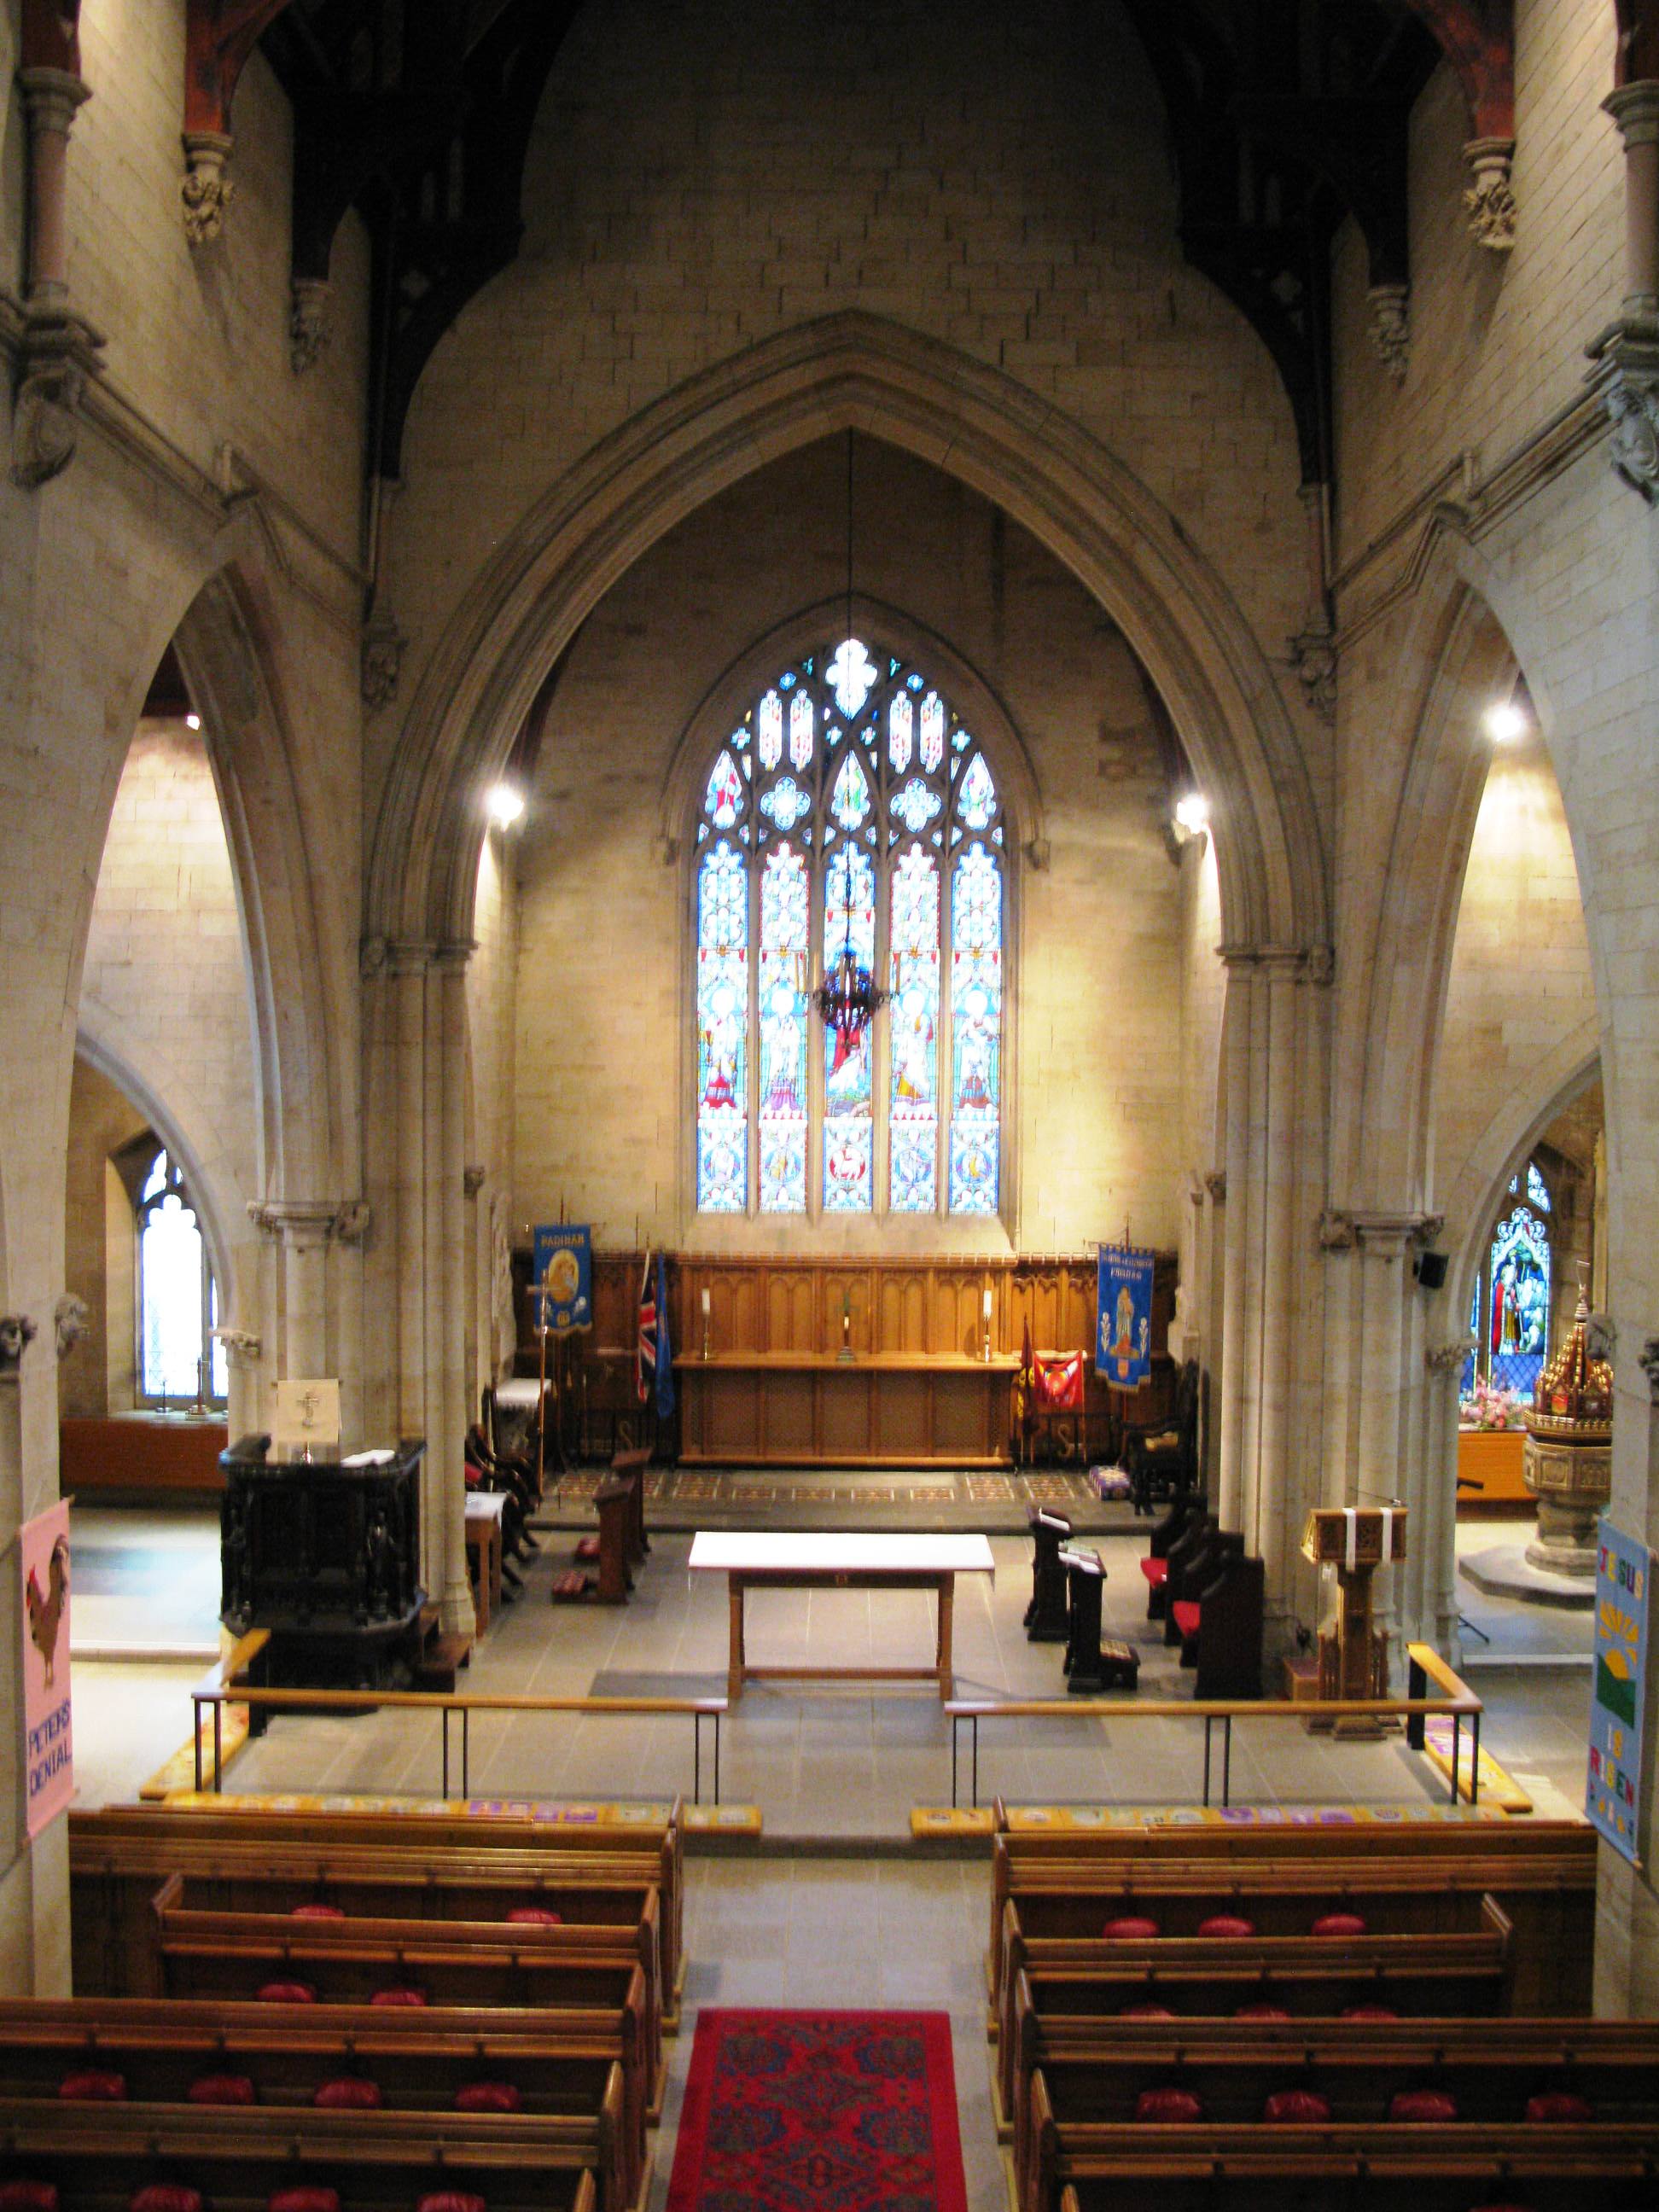 The Interior of St Leonard